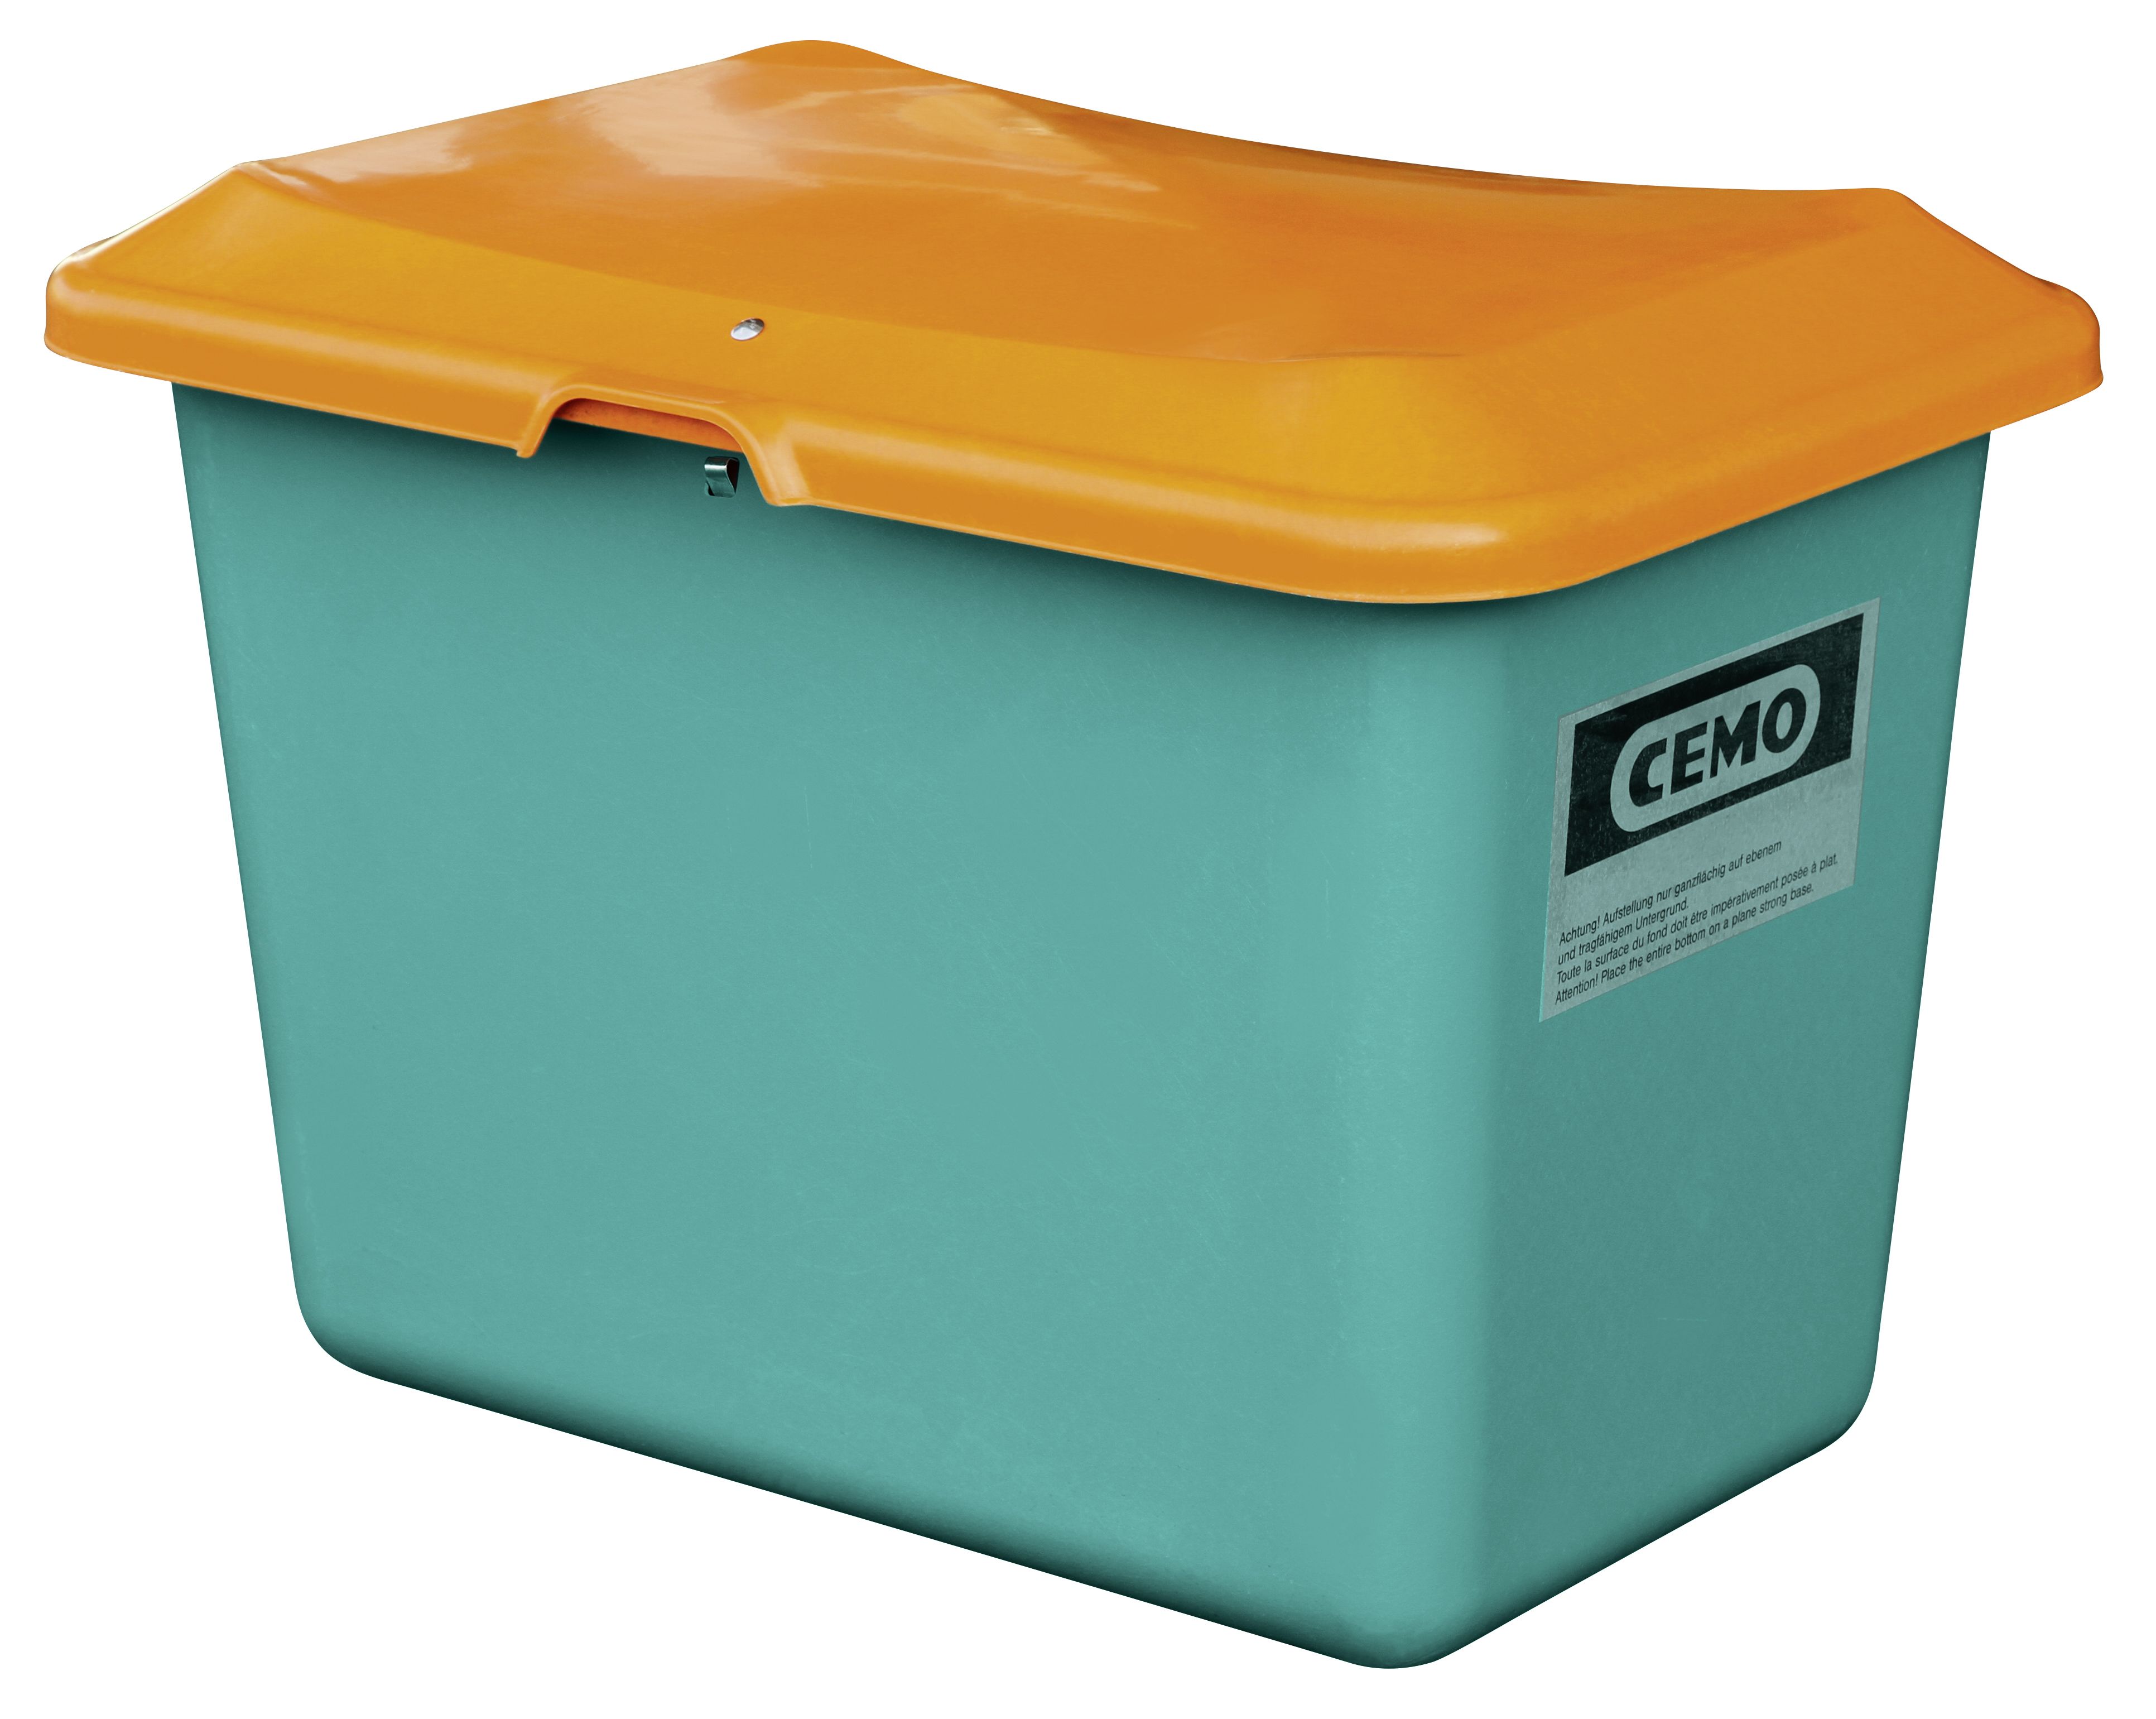 CEMO GFK Streugutbehälter PLUS3, 200 l, grün/orange - 10574